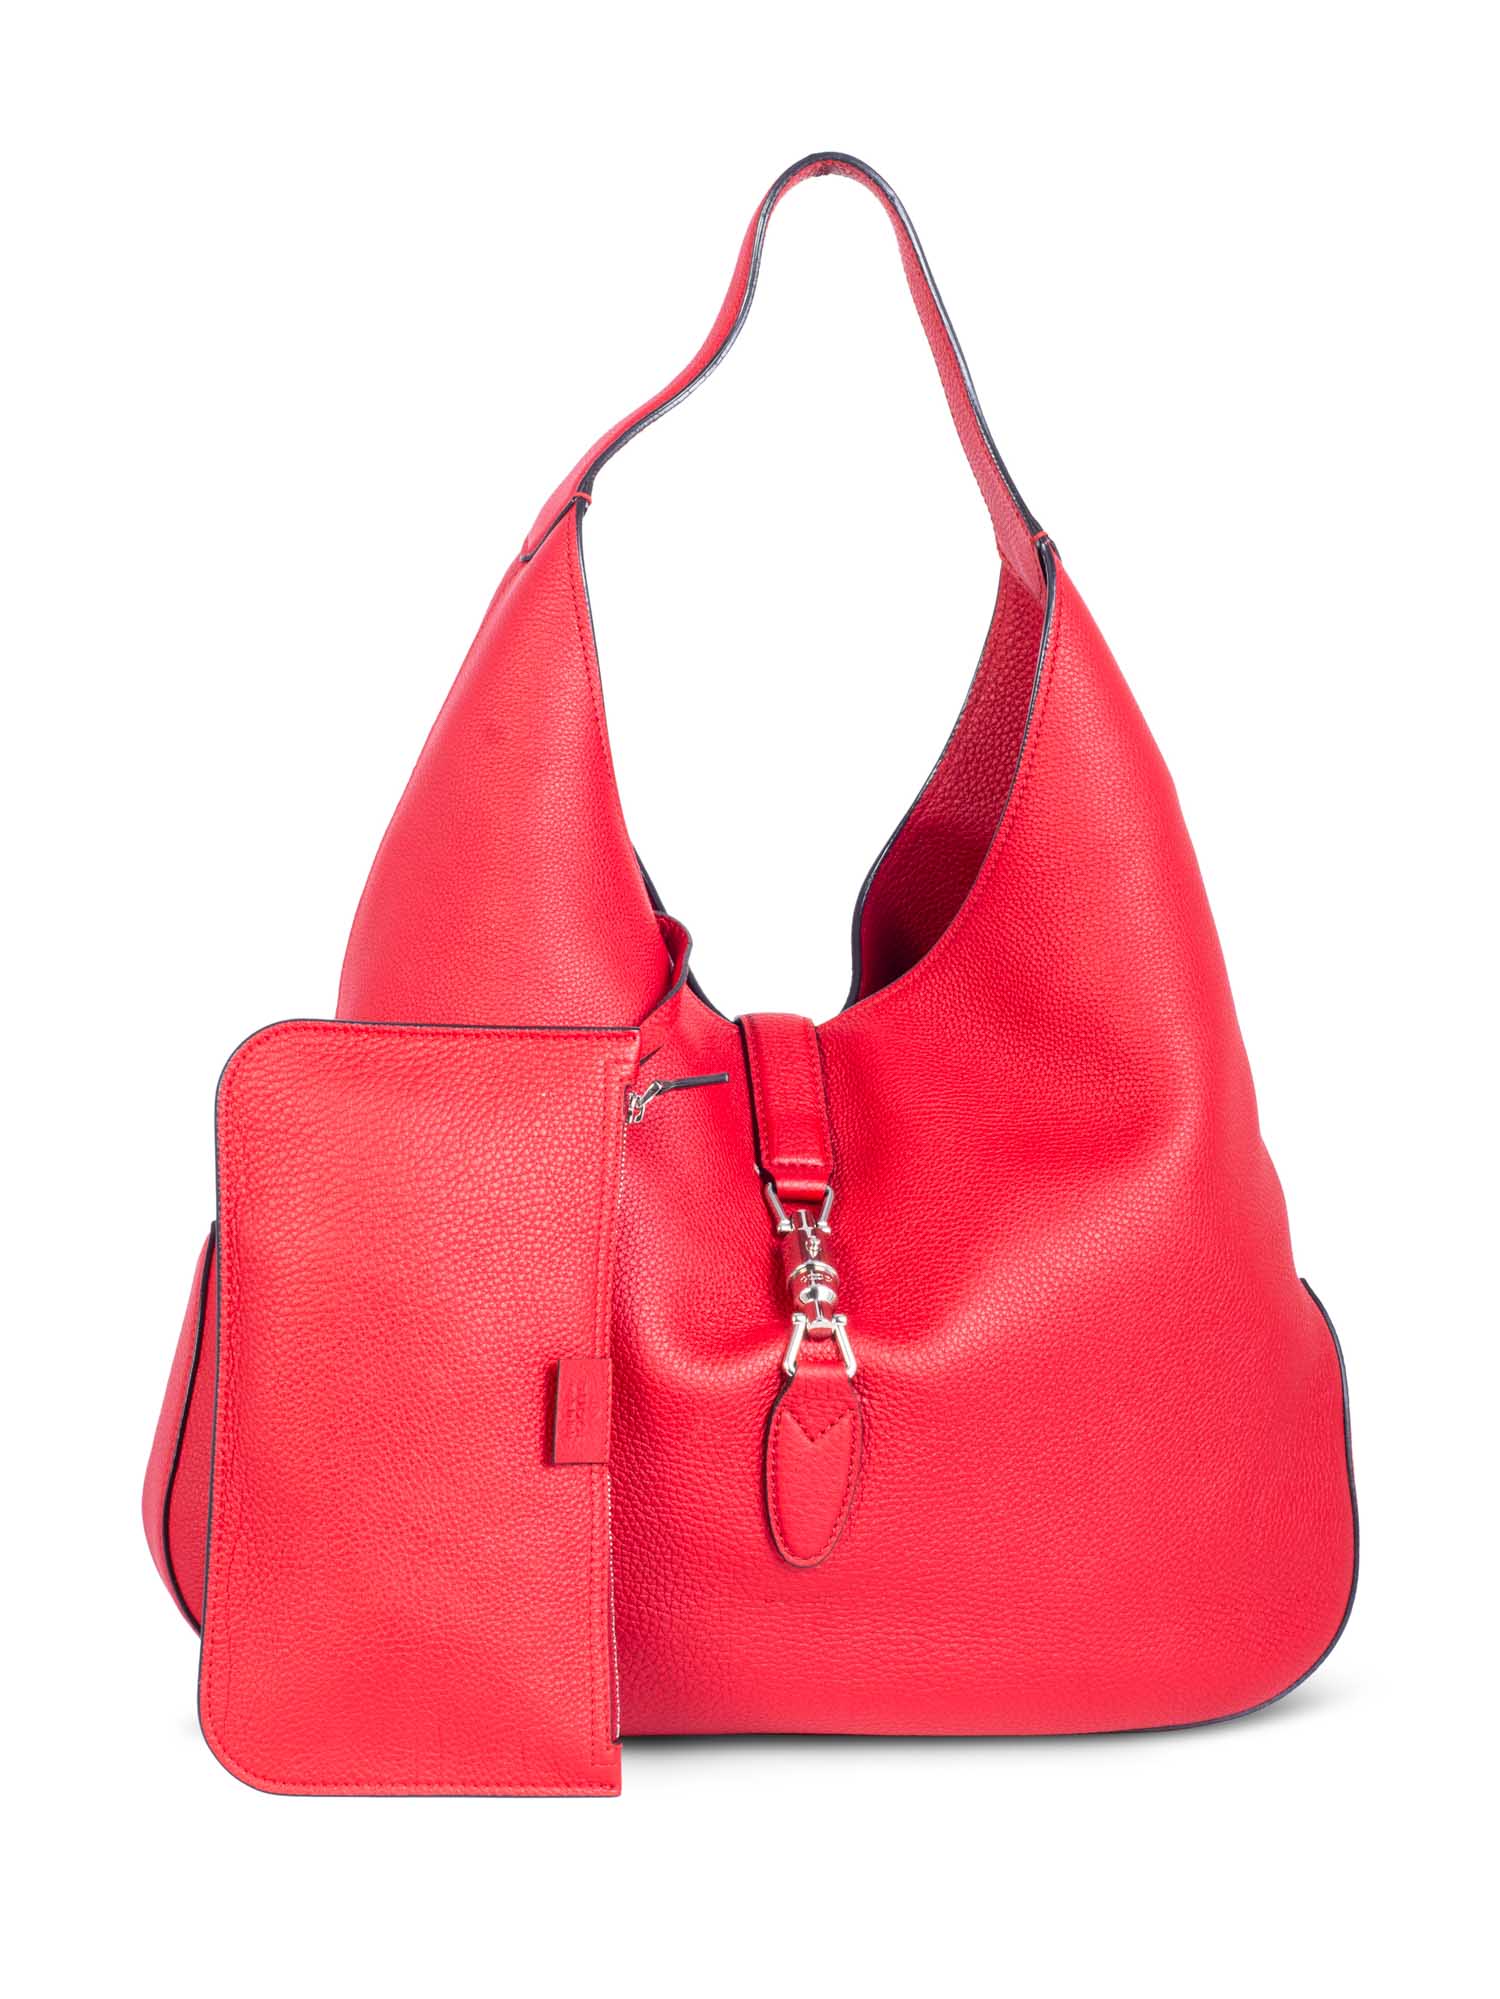 Gucci Leather Horsebit Large Jackie Hobo Bag Wallet Red